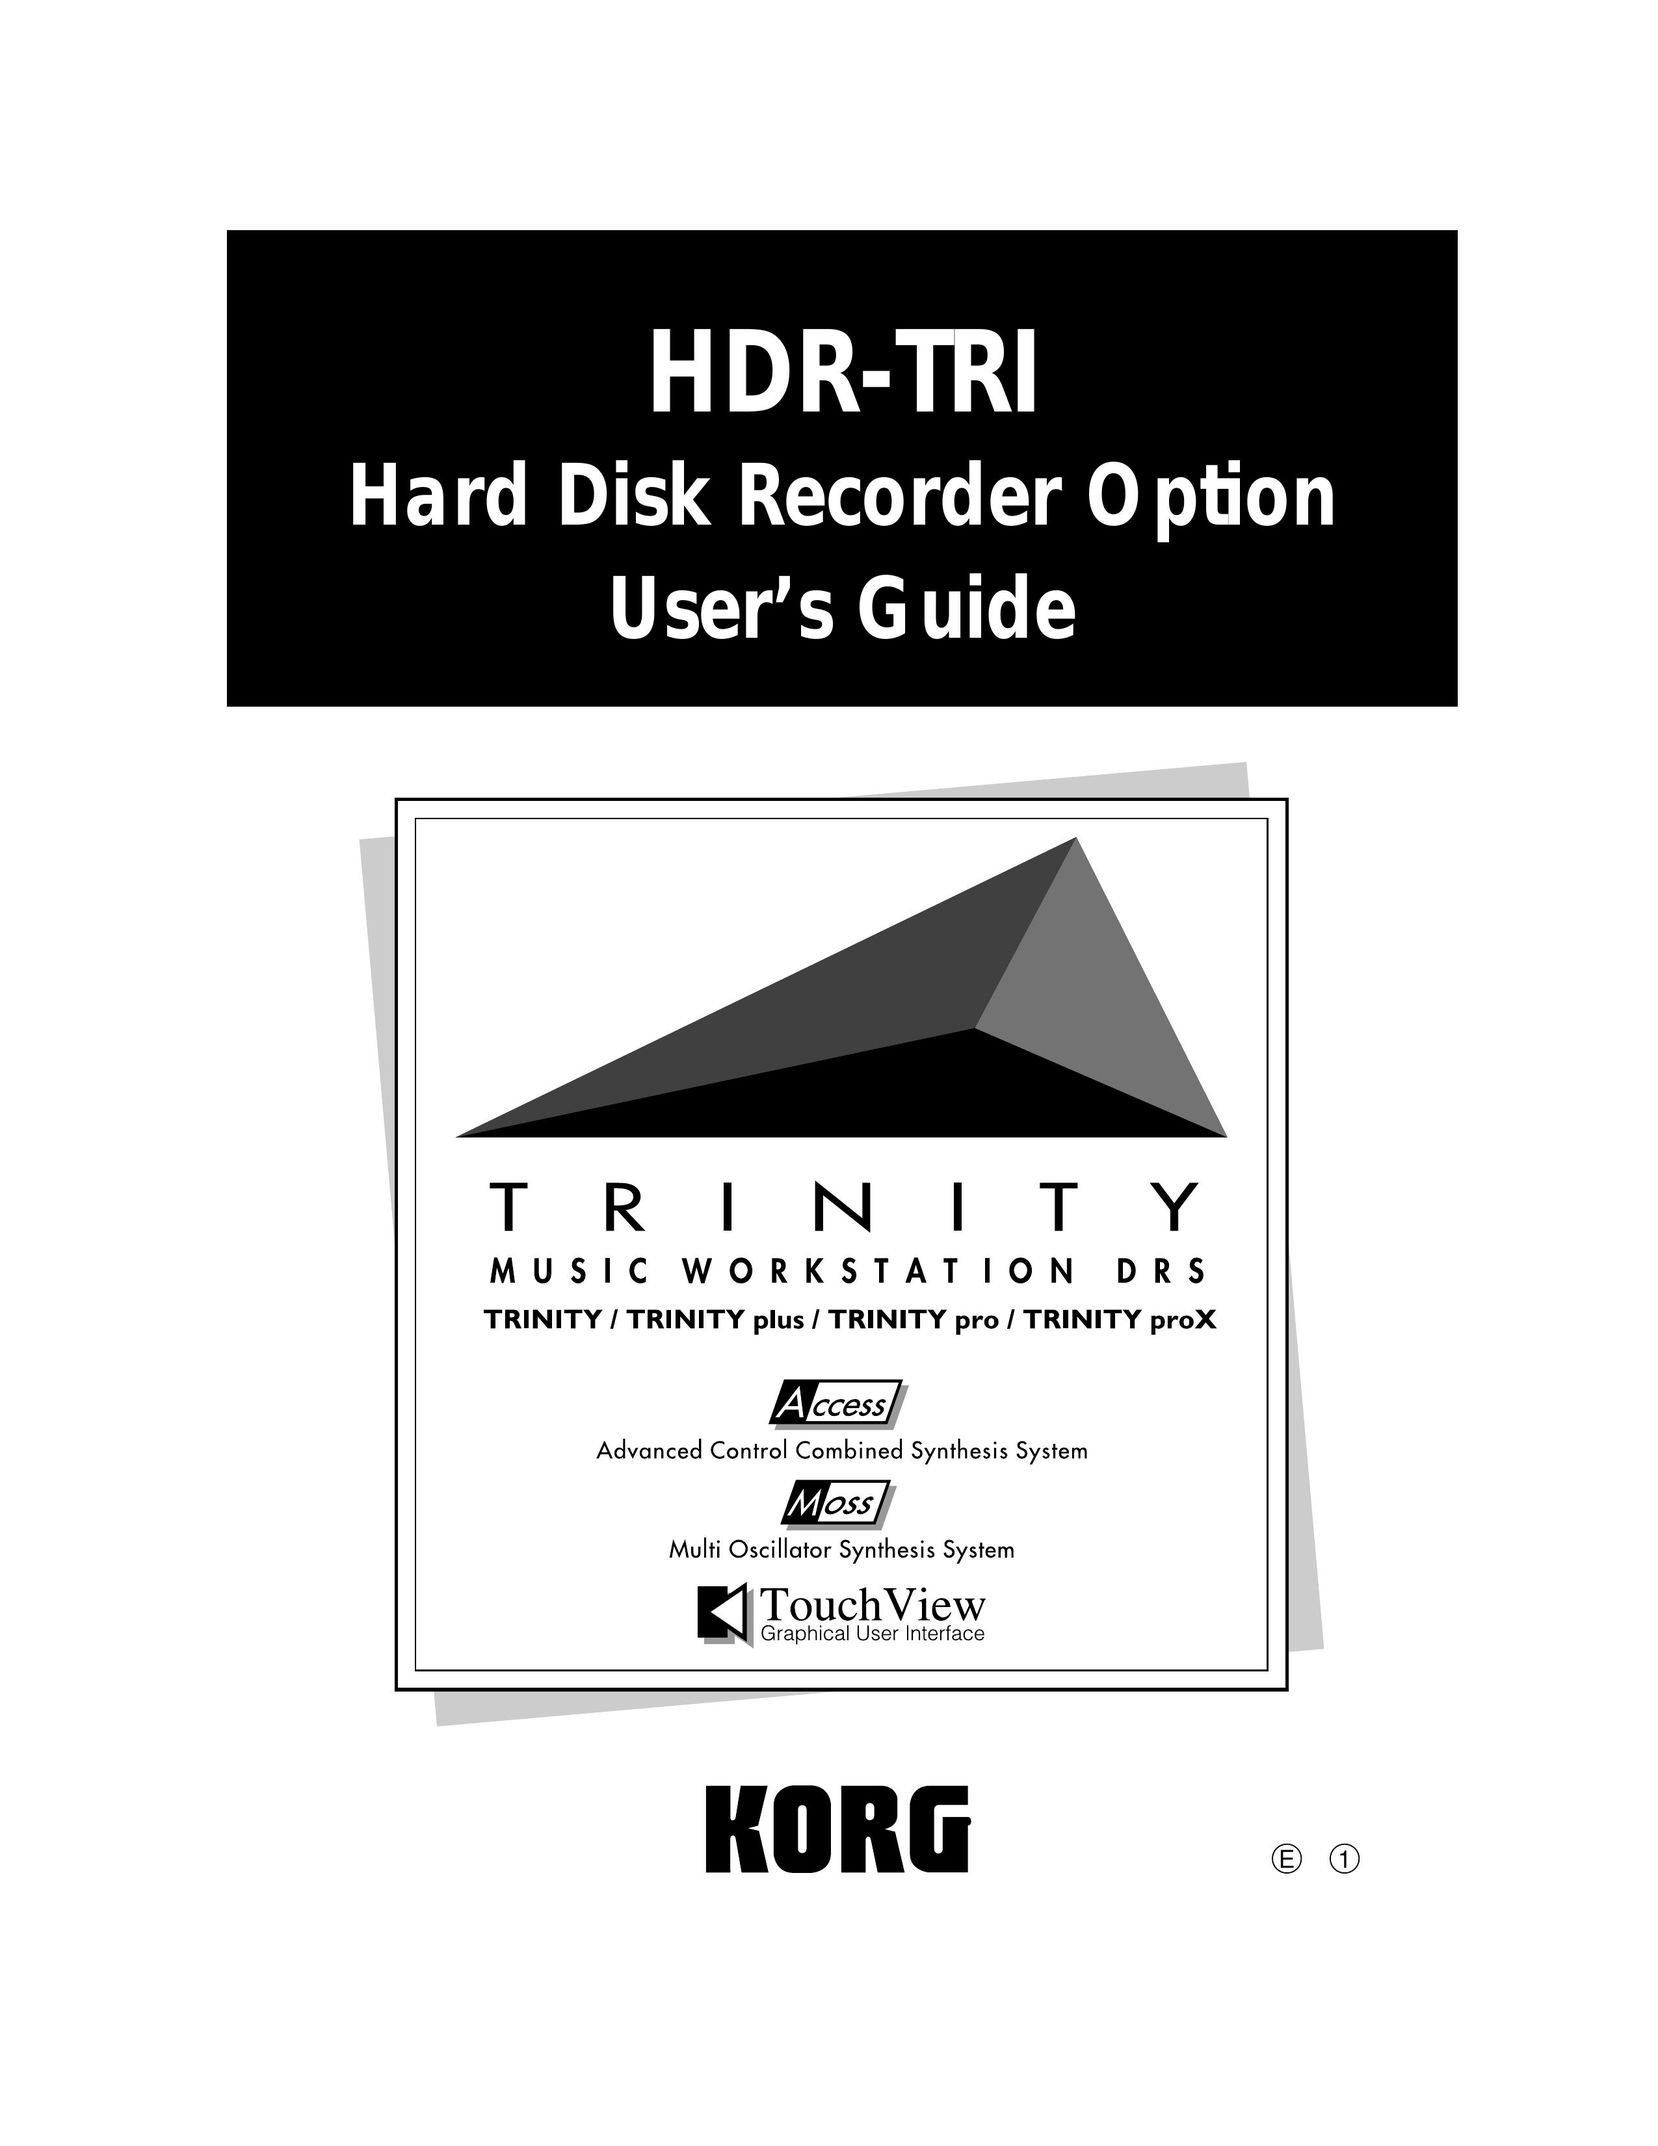 Korg HDR-TRI Range User Manual